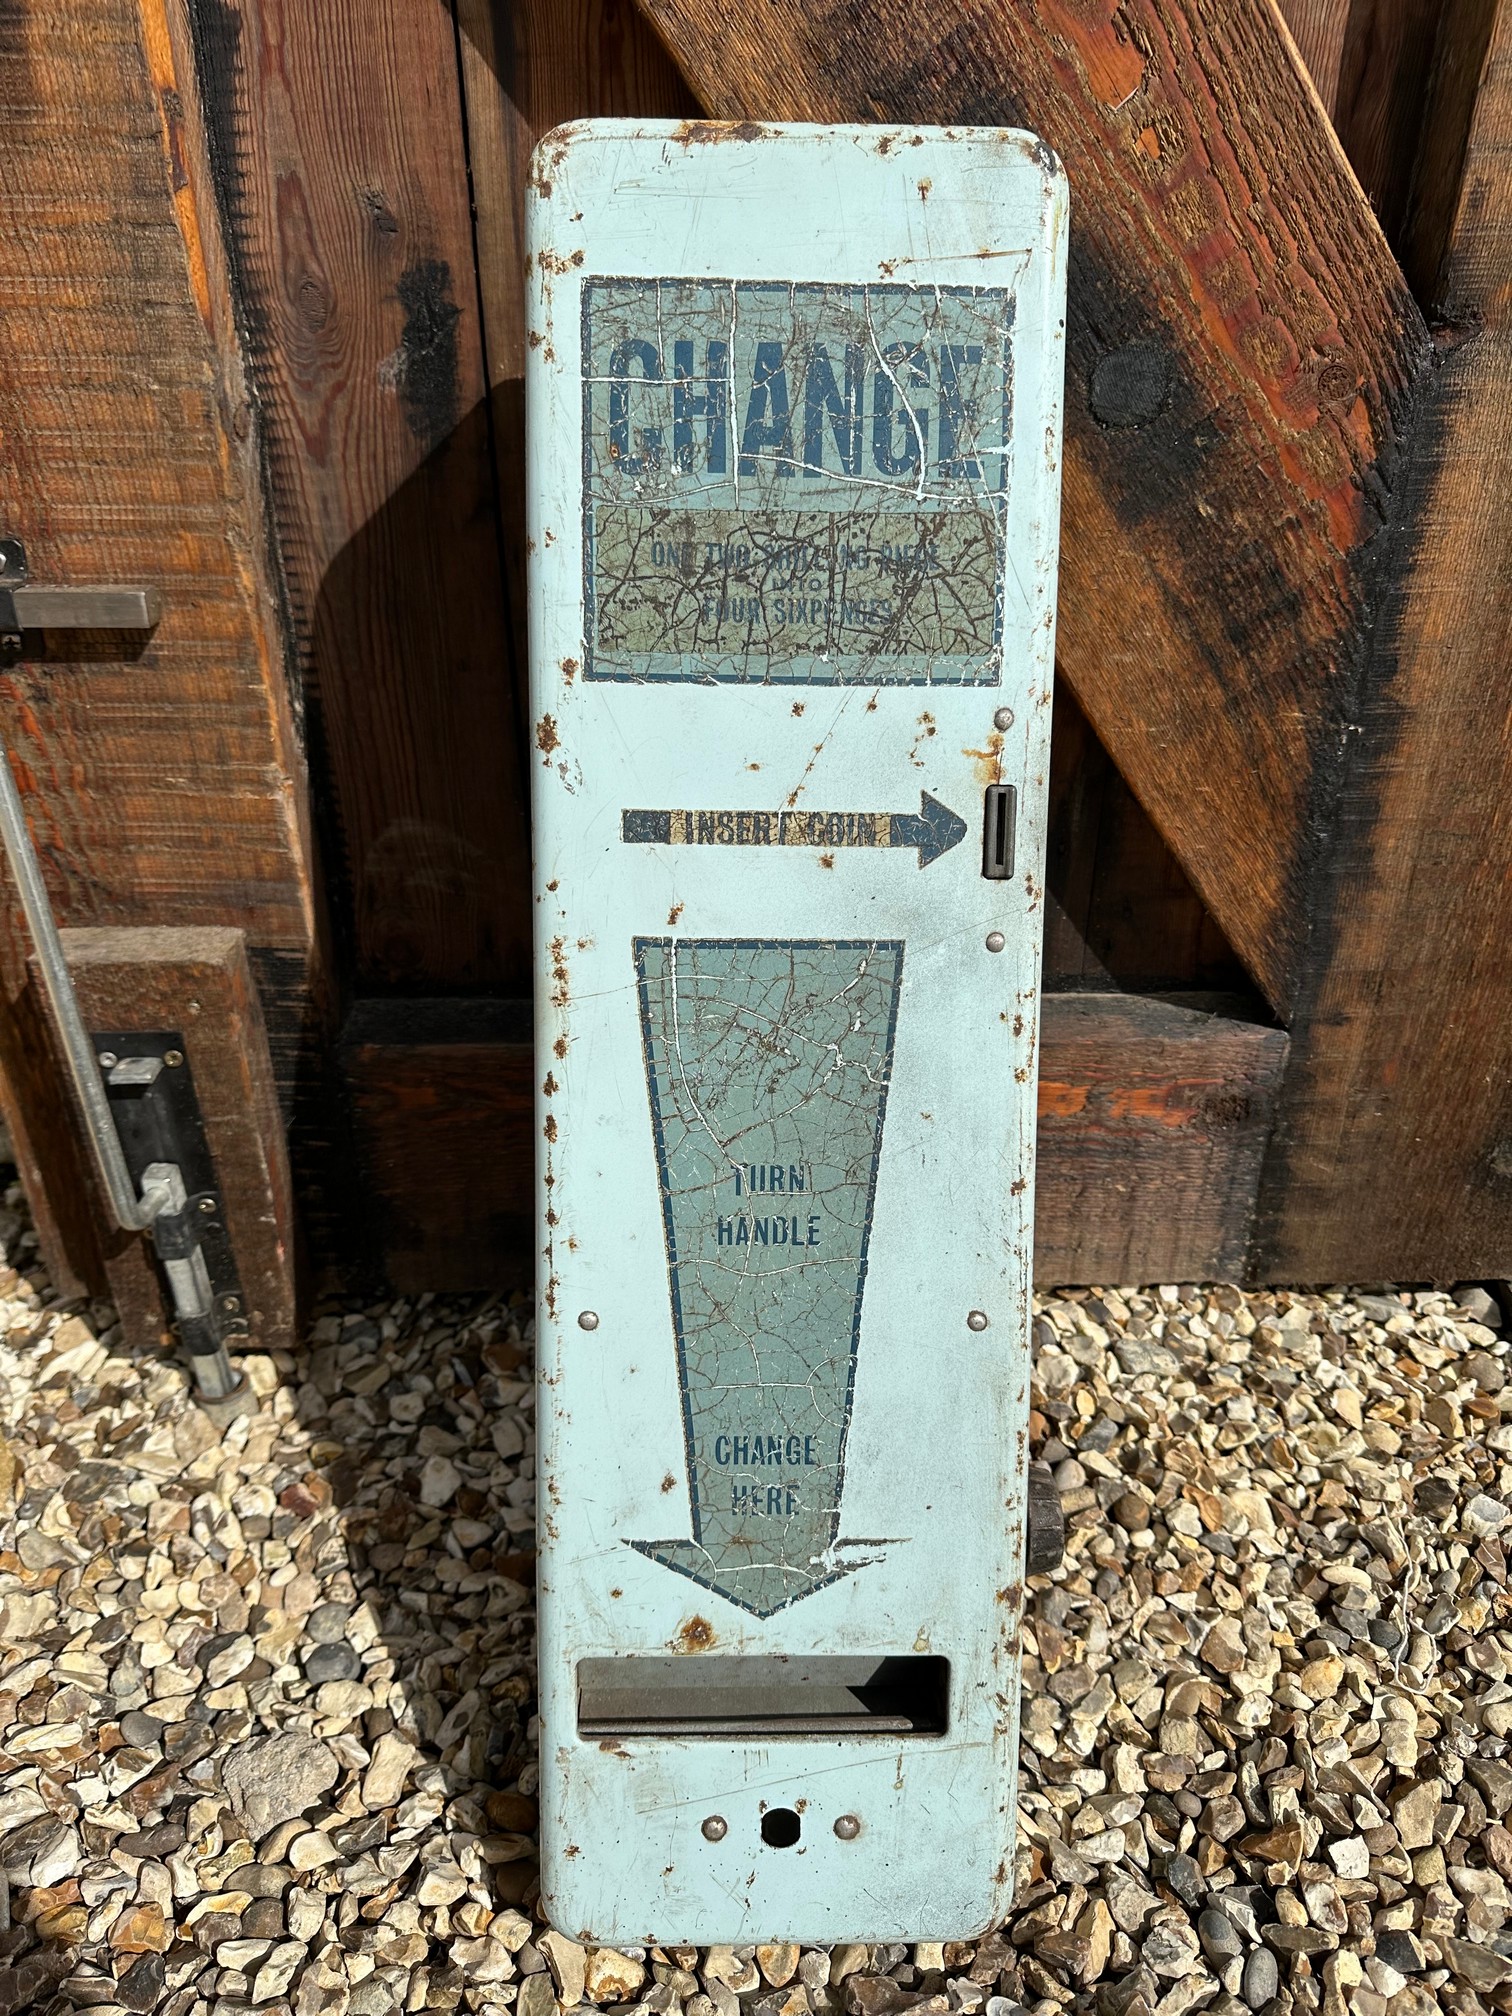 A 'Change' vending machine, 8 1/4 x 29 1/2".